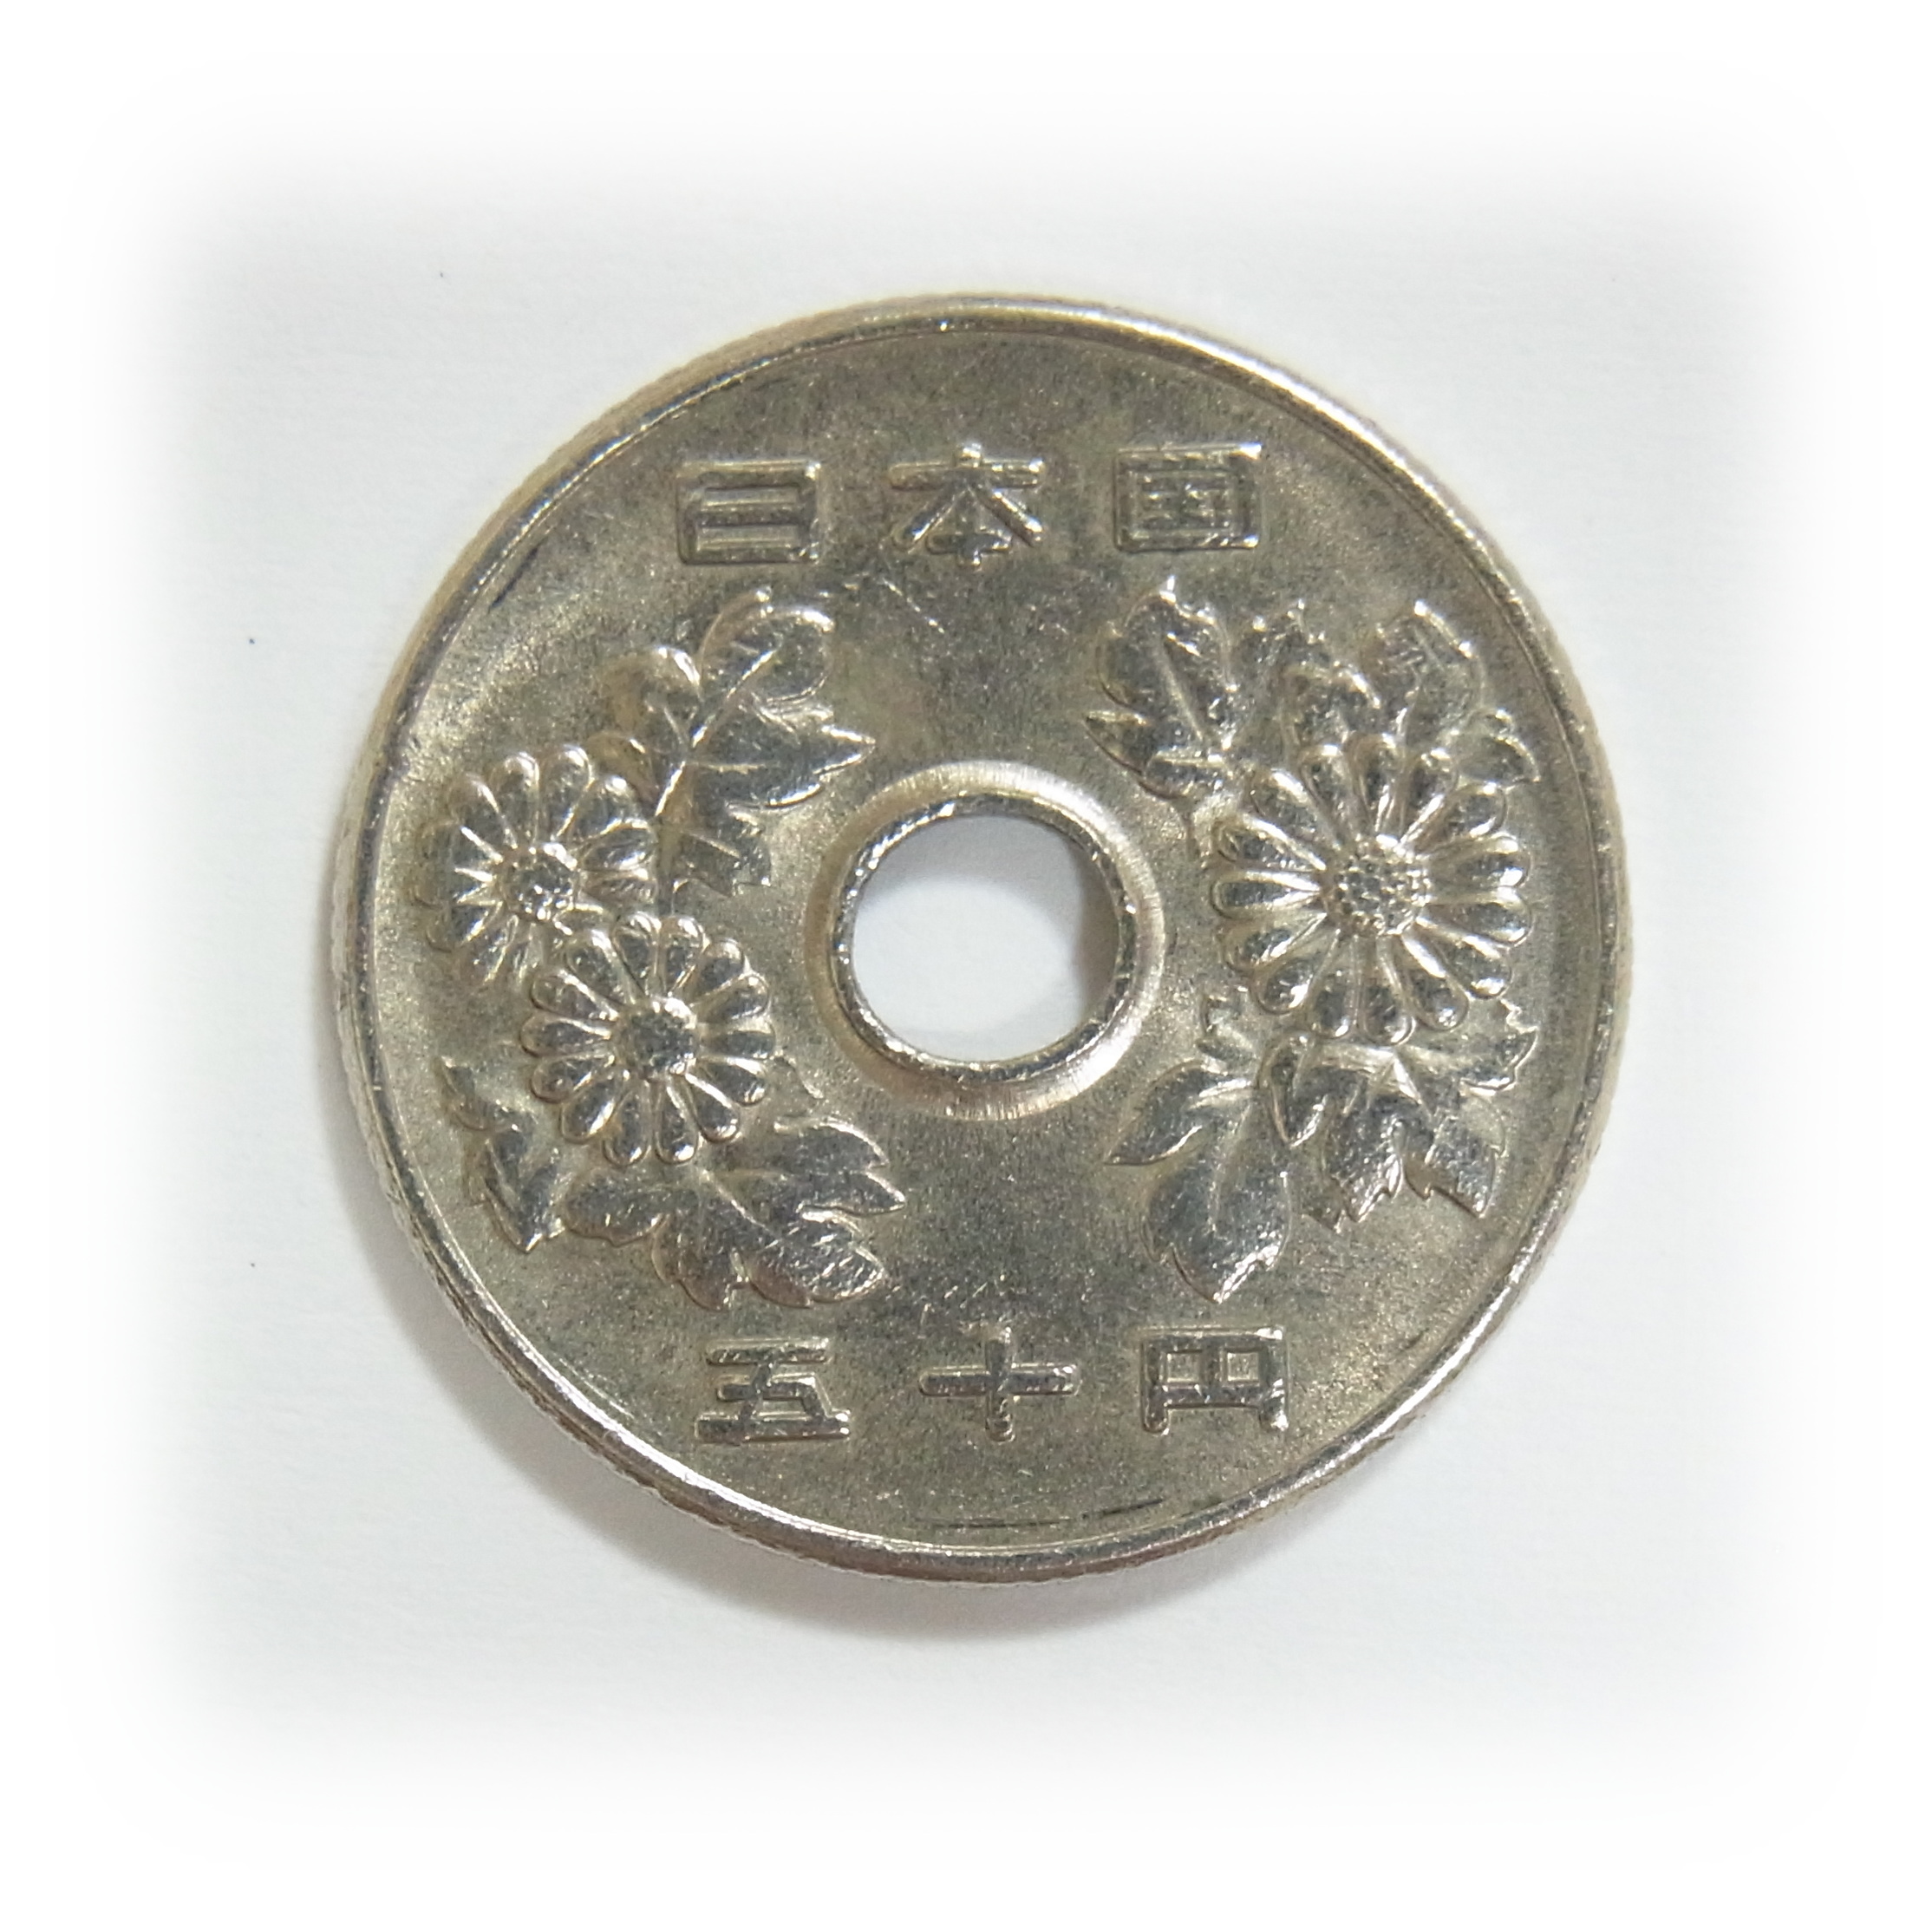 Three chrysanthemum flowers in the 50-yen coin of Japan